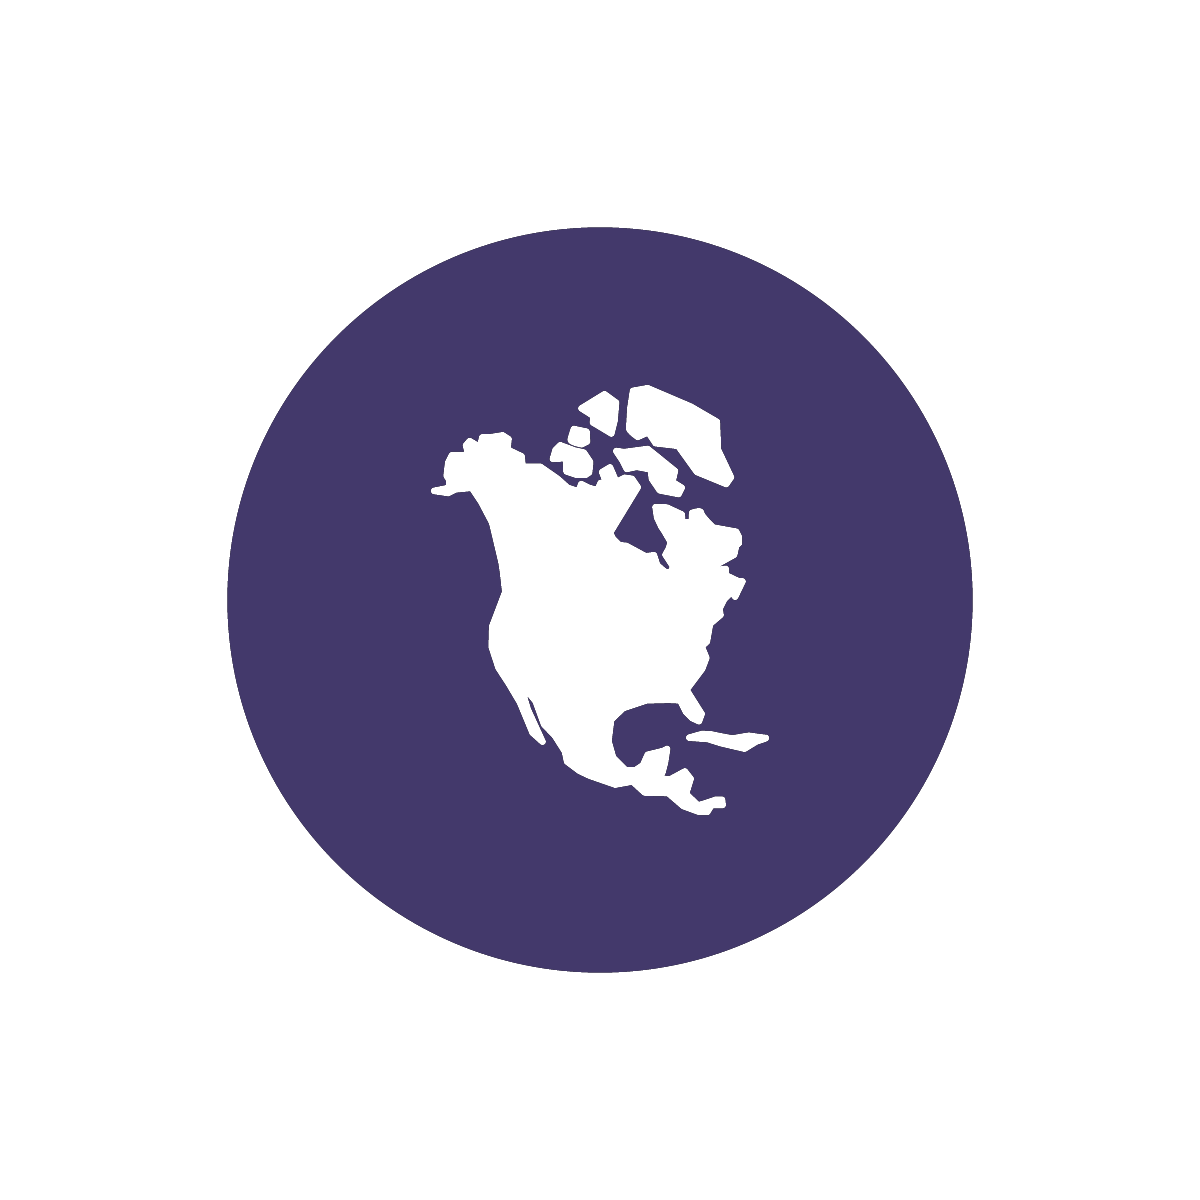 a silhouette of North America